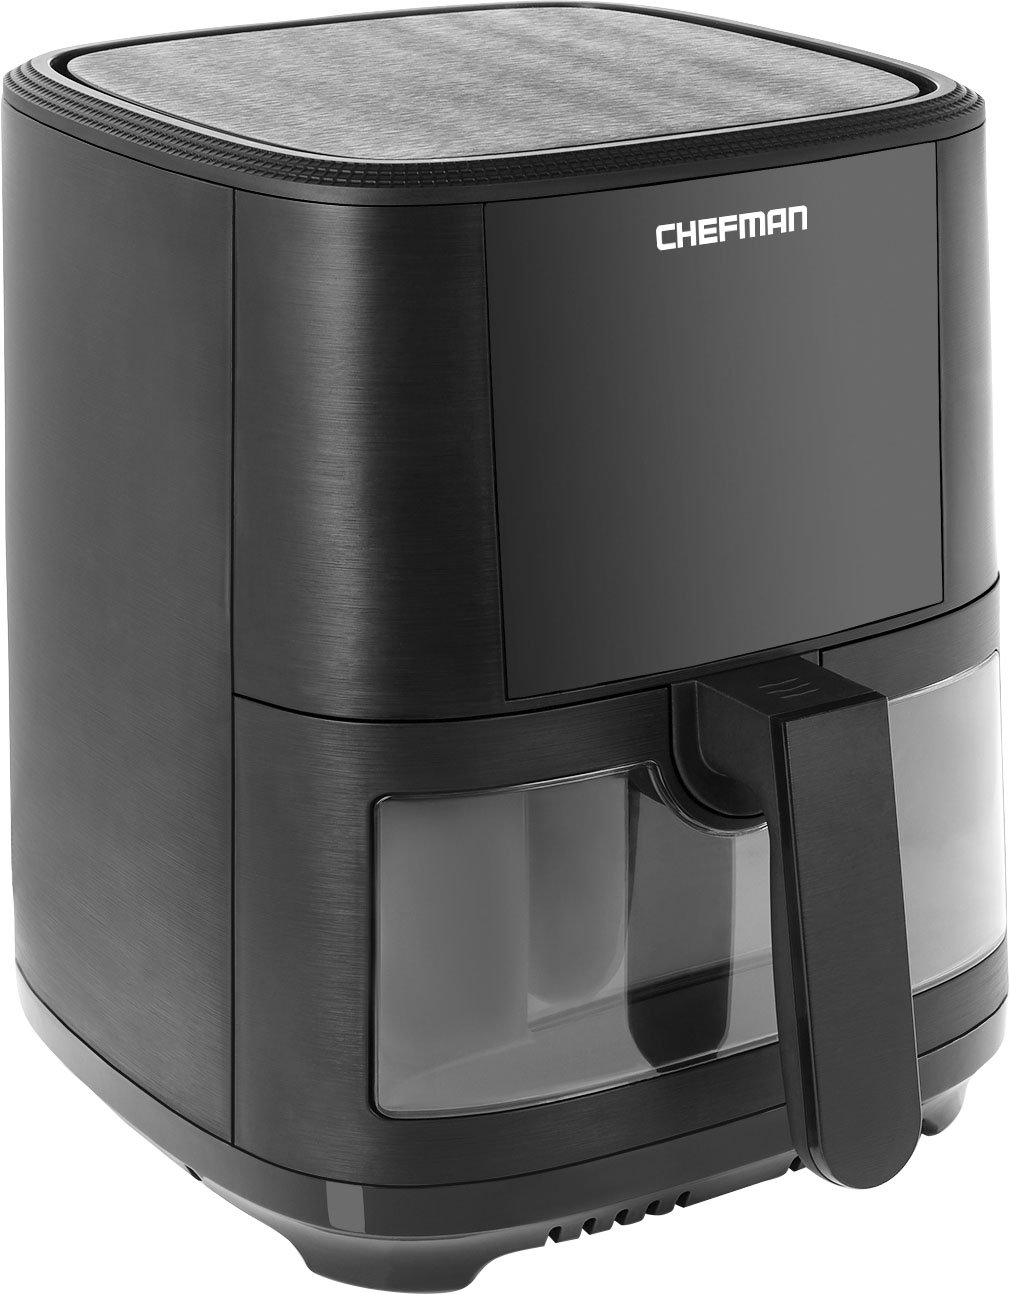 Chefman 5-Quart TurboFry Touch Digital Air Fryer $35